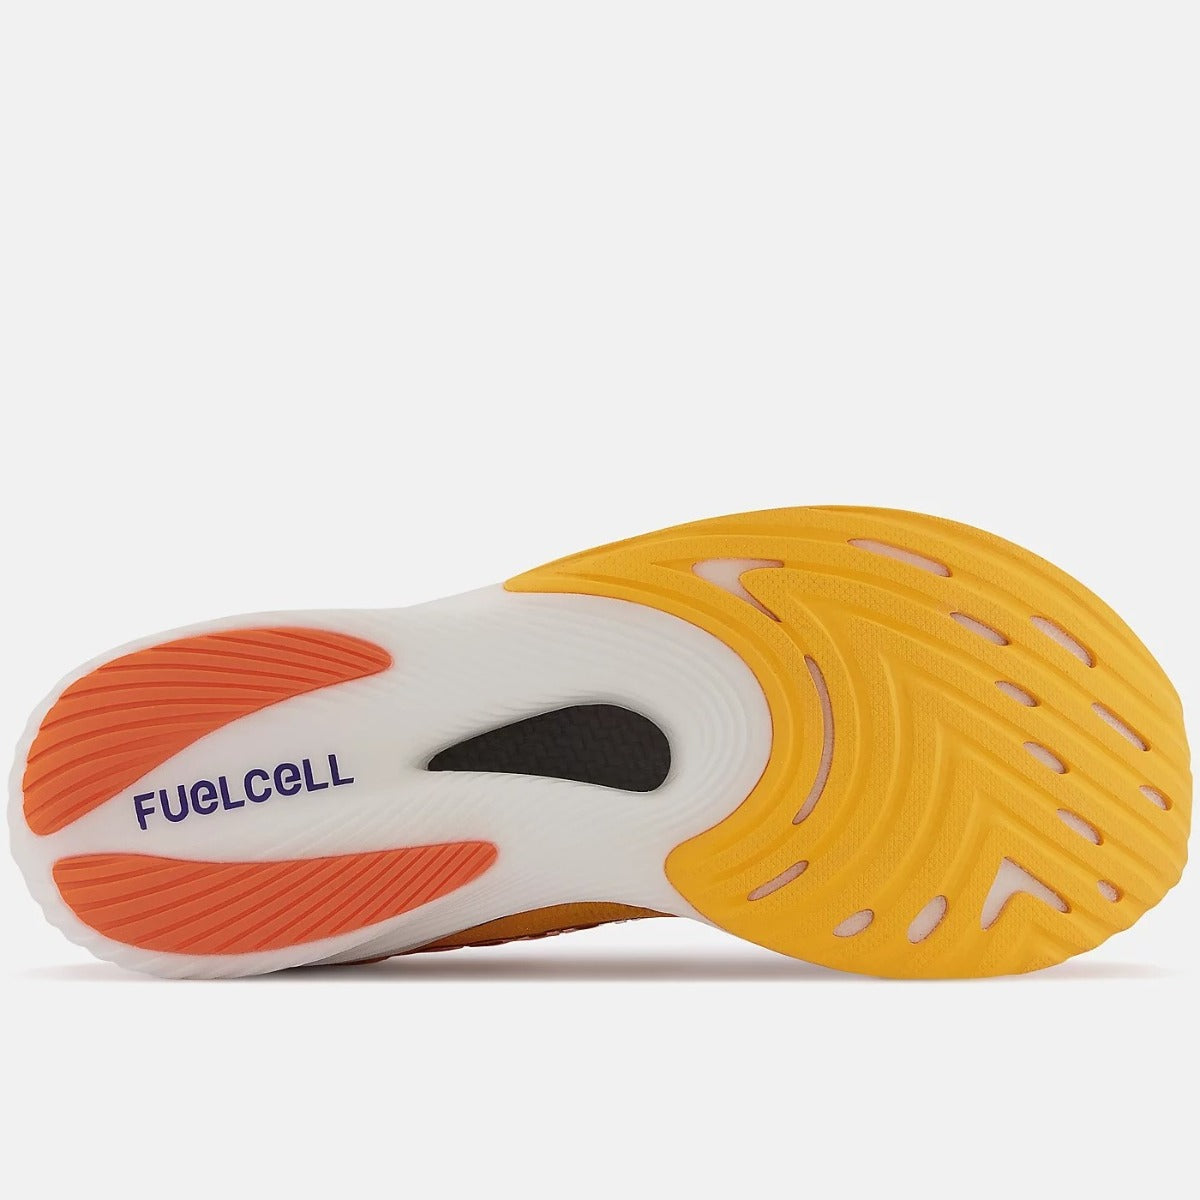 New Balance Fuelcell Rc Elite V2 Running Shoes Men's (Orange)